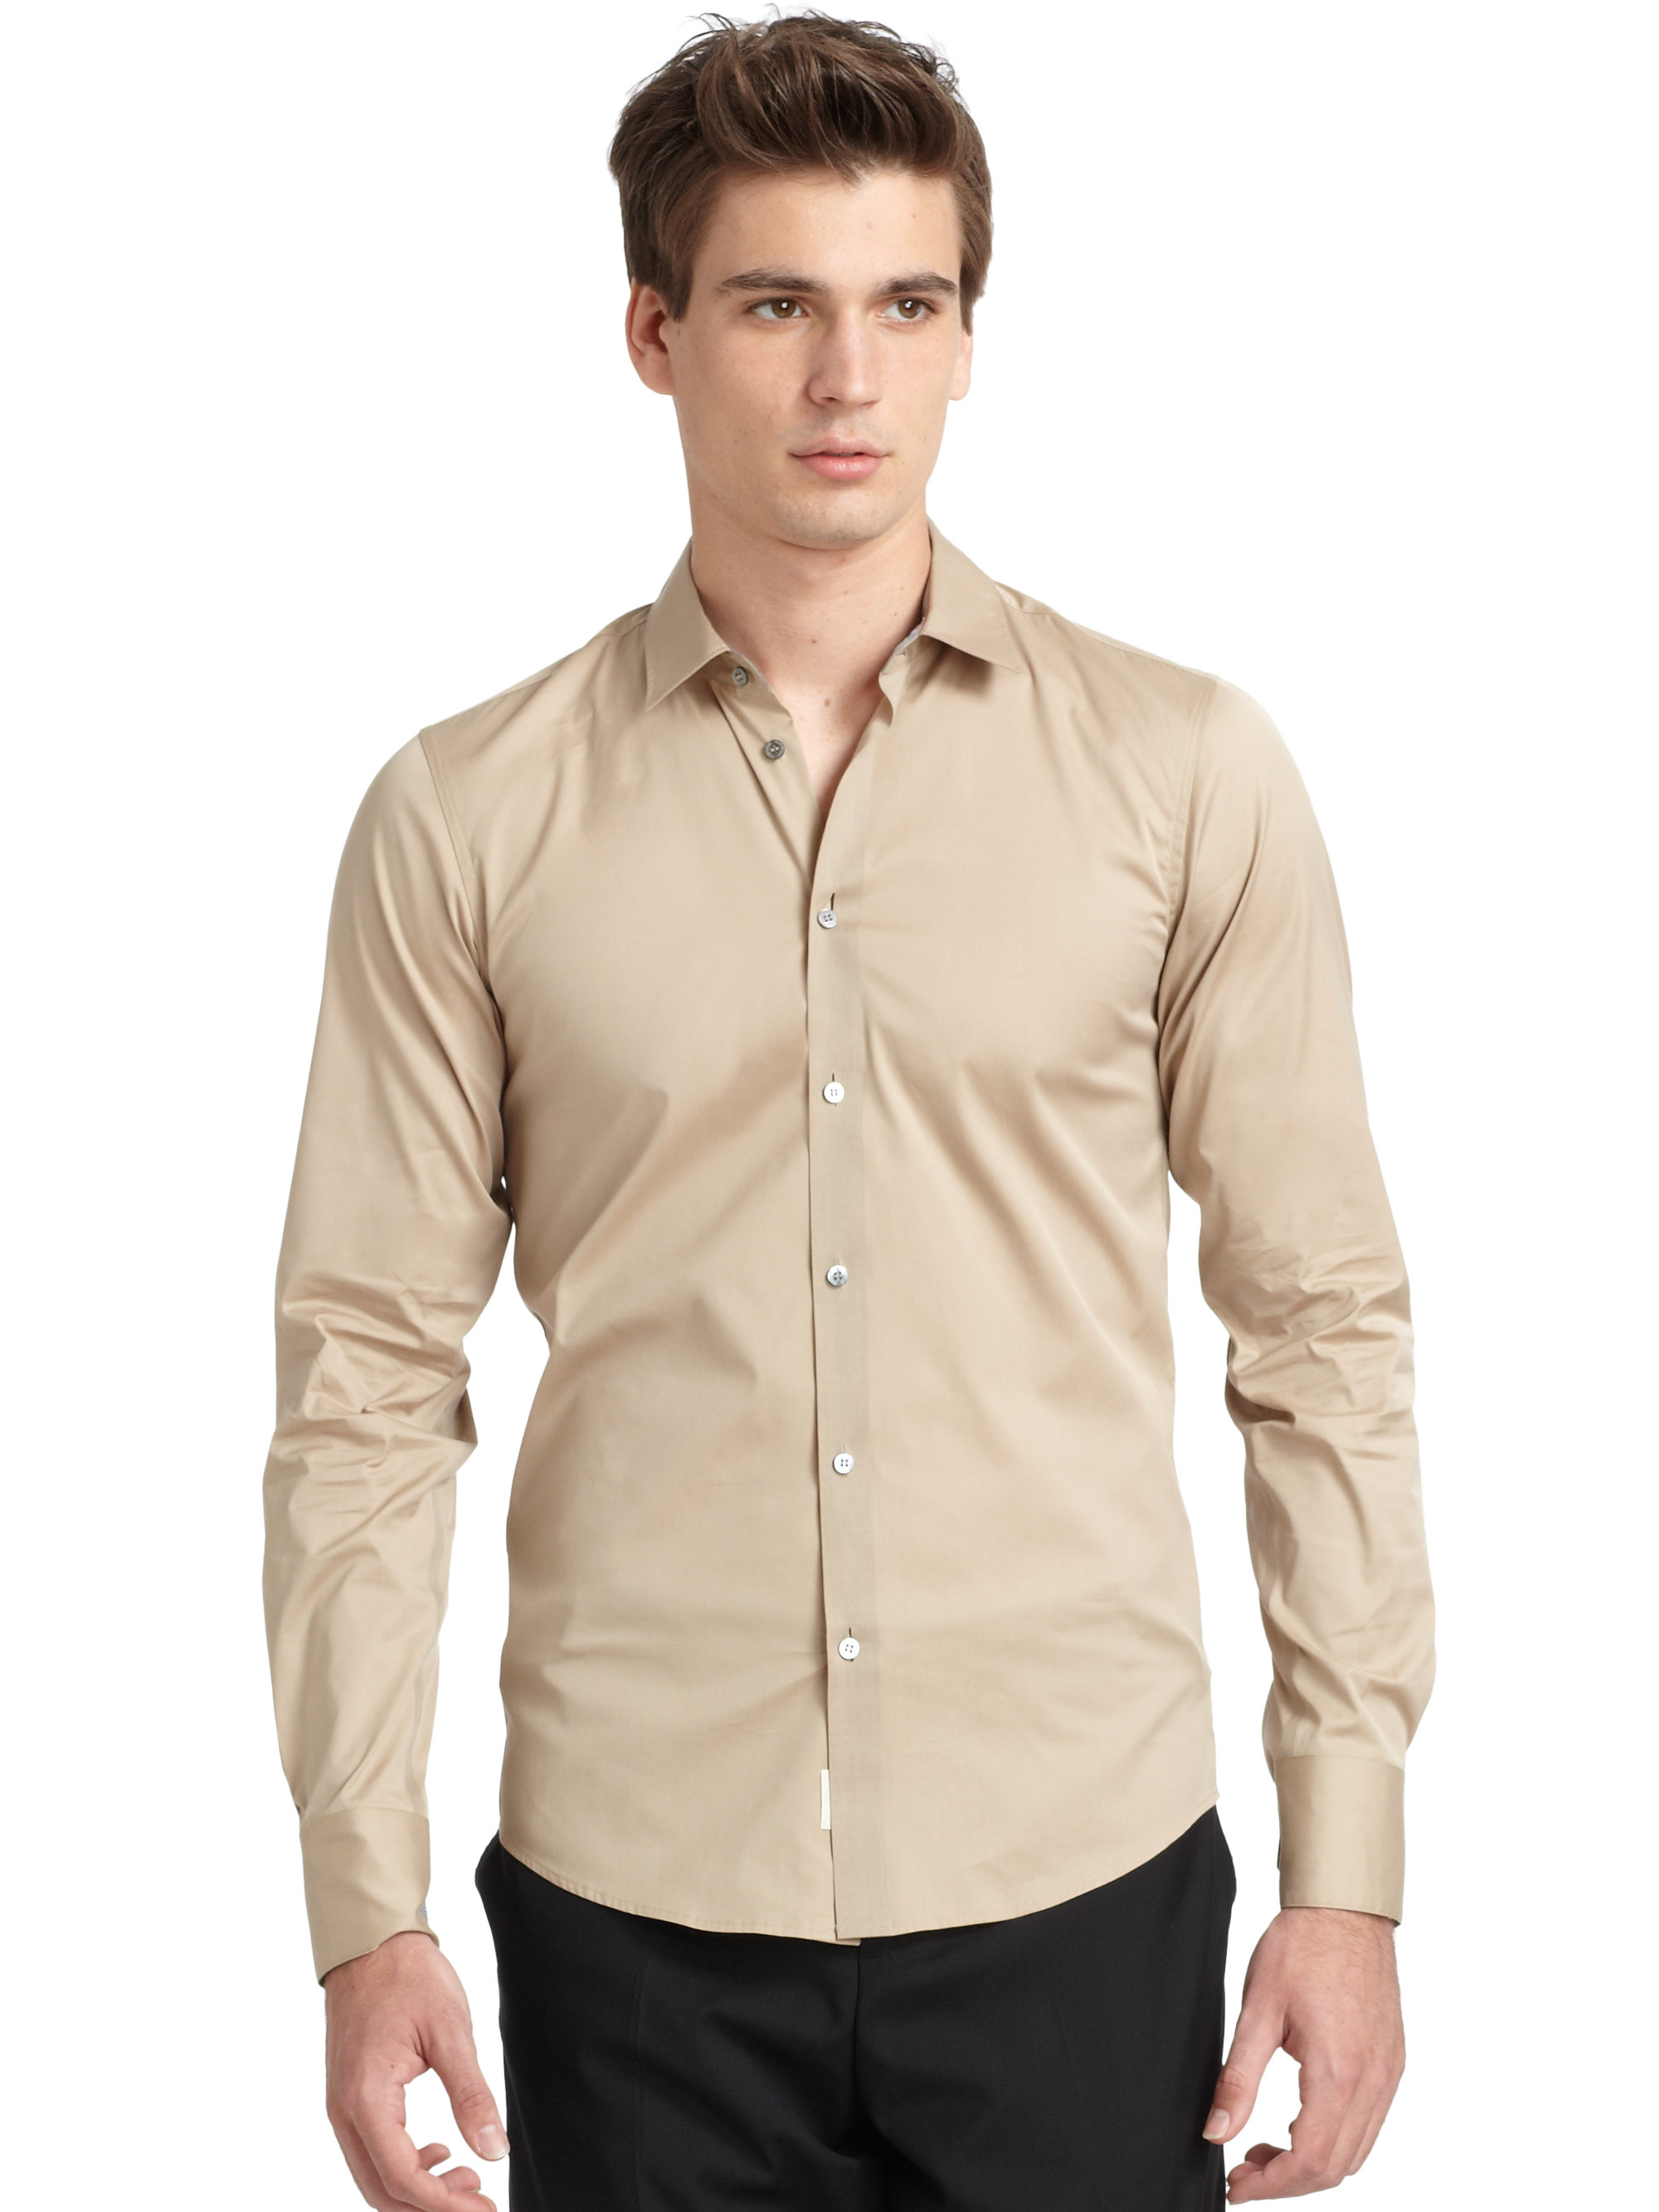 WSPLYSPJY Mens Long Sleeve Solid Lapel Slim Fit Button Down Dress Shirts 